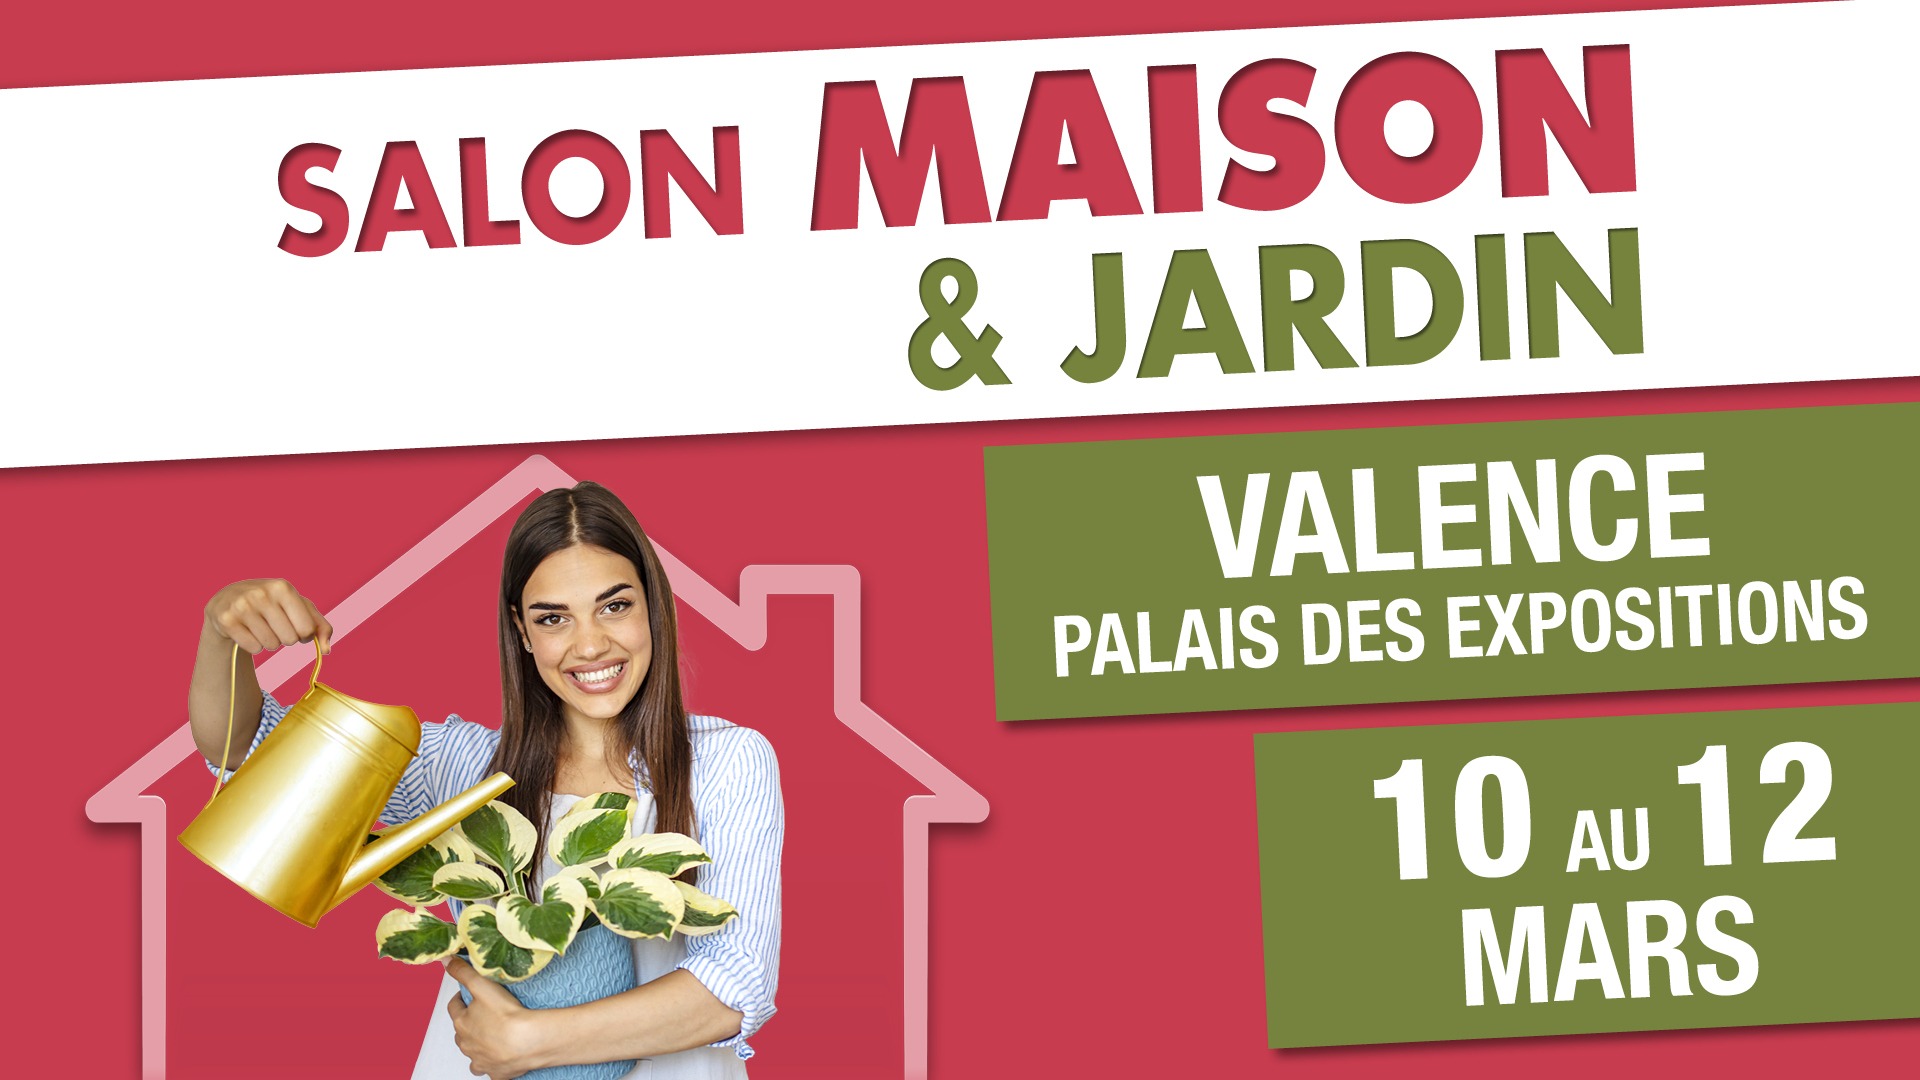 Salon Maison & Jardin